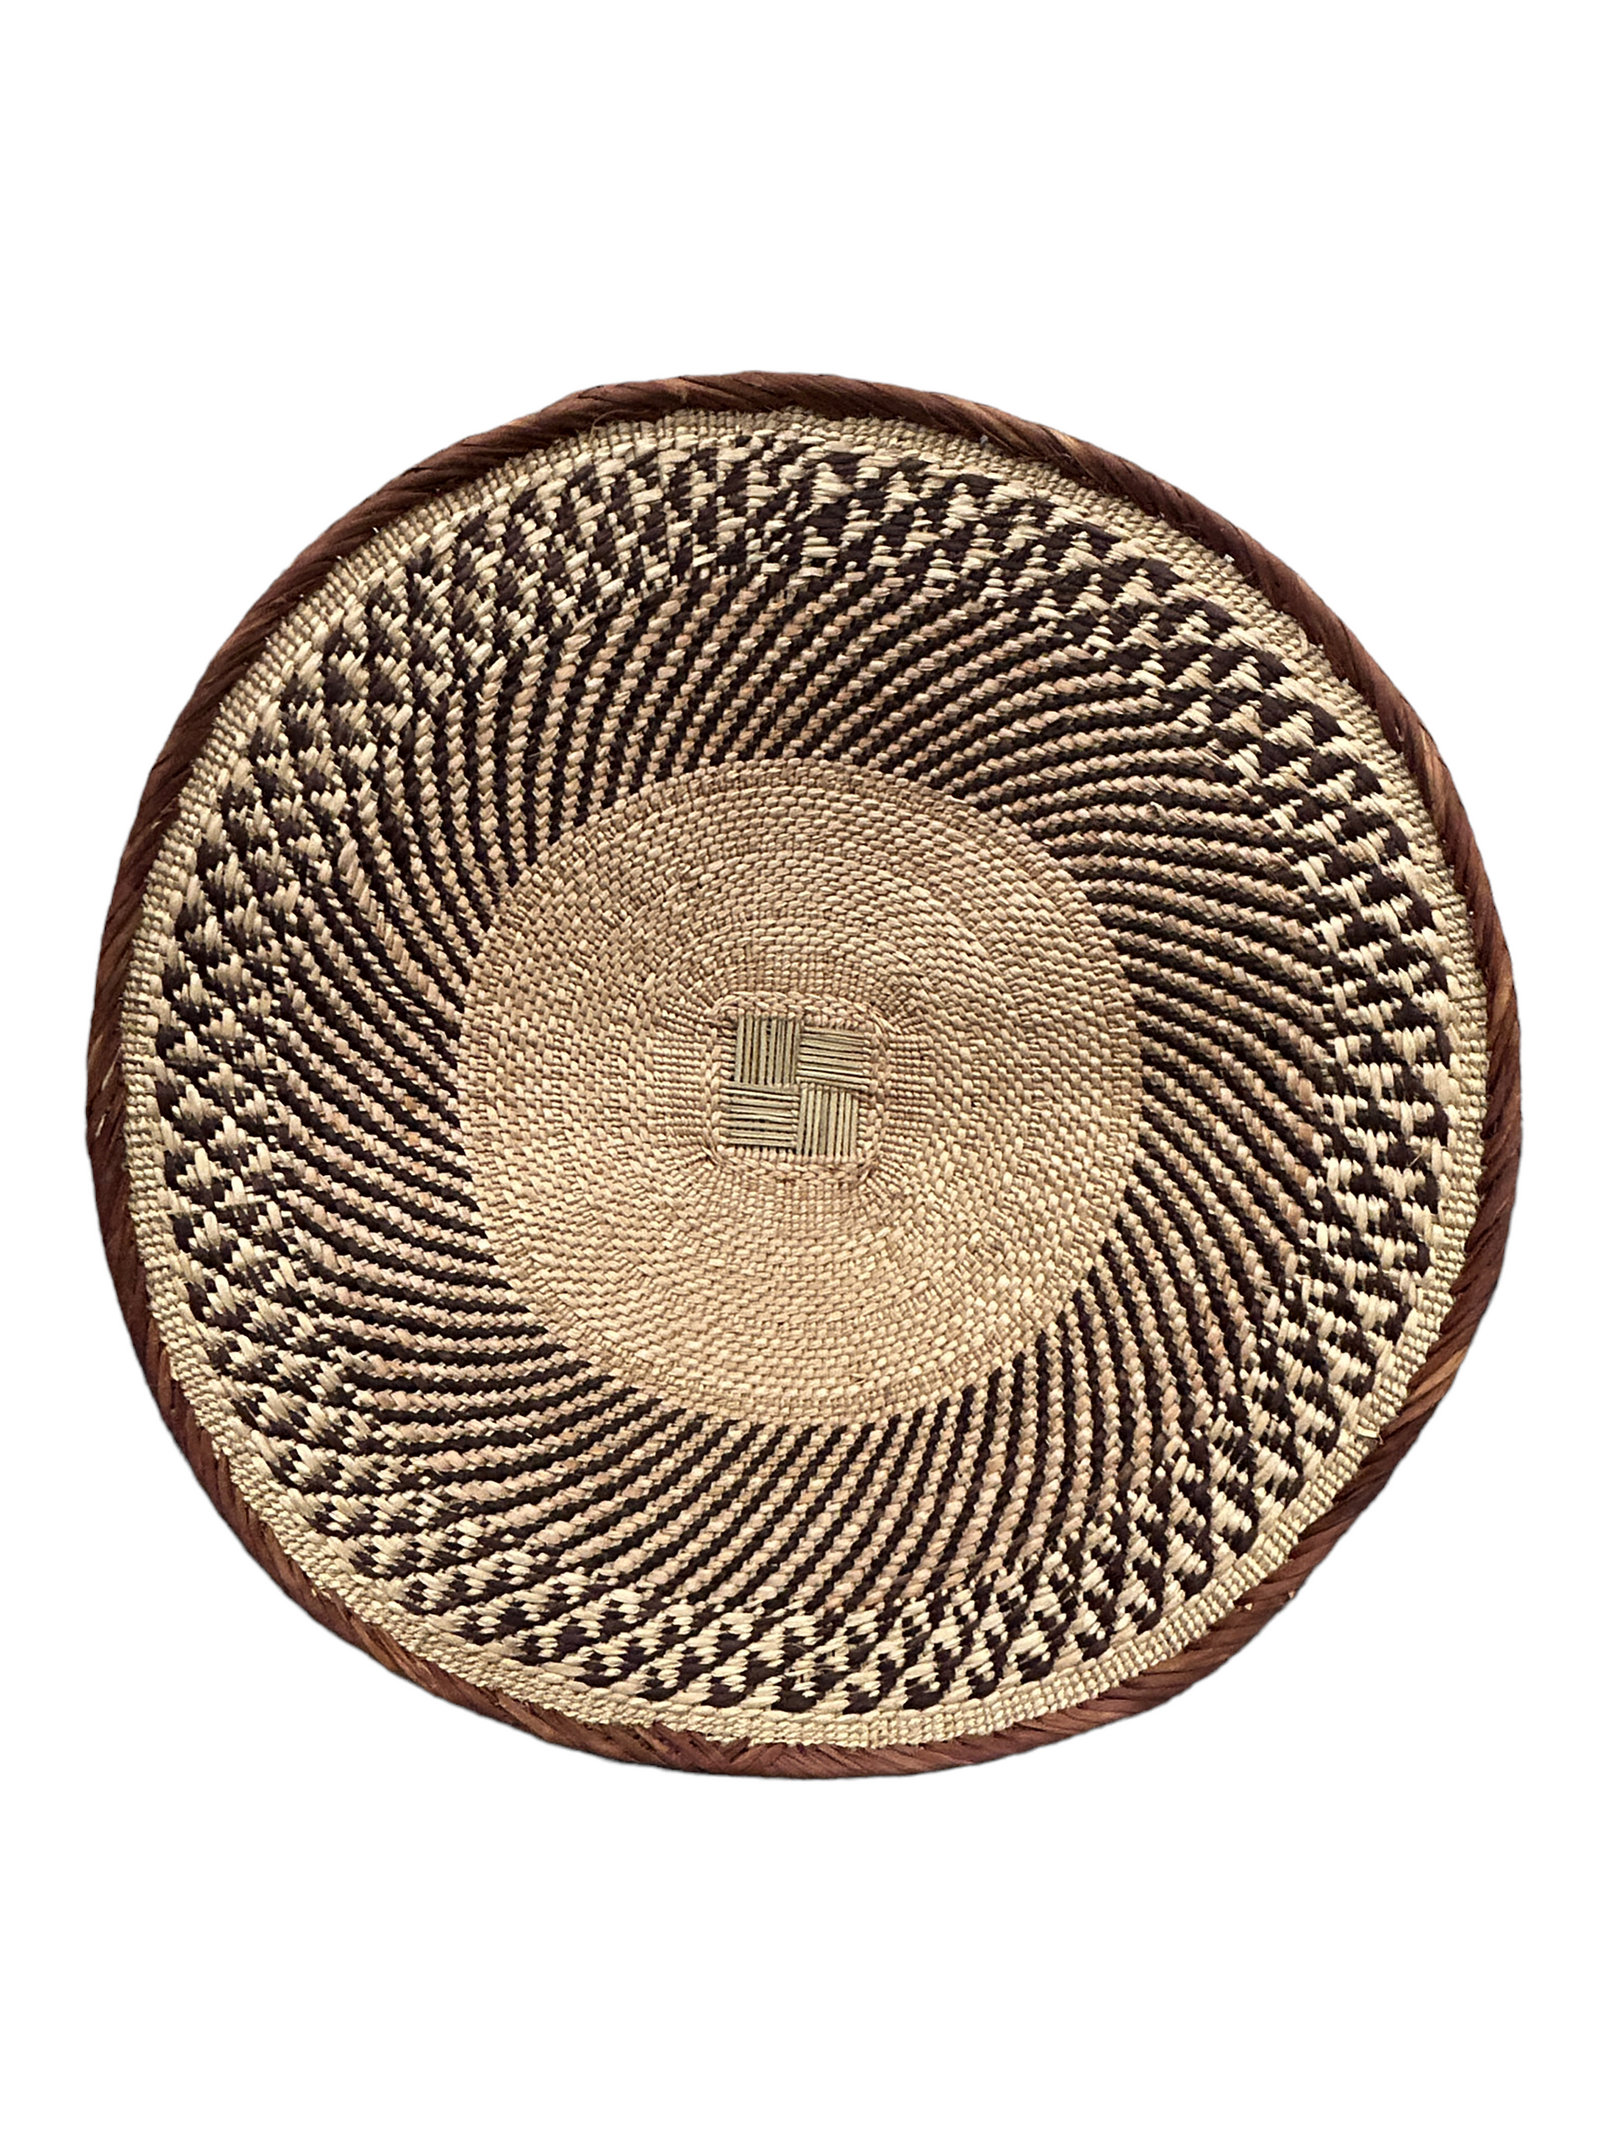 Tonga Basket Natural (55-01)